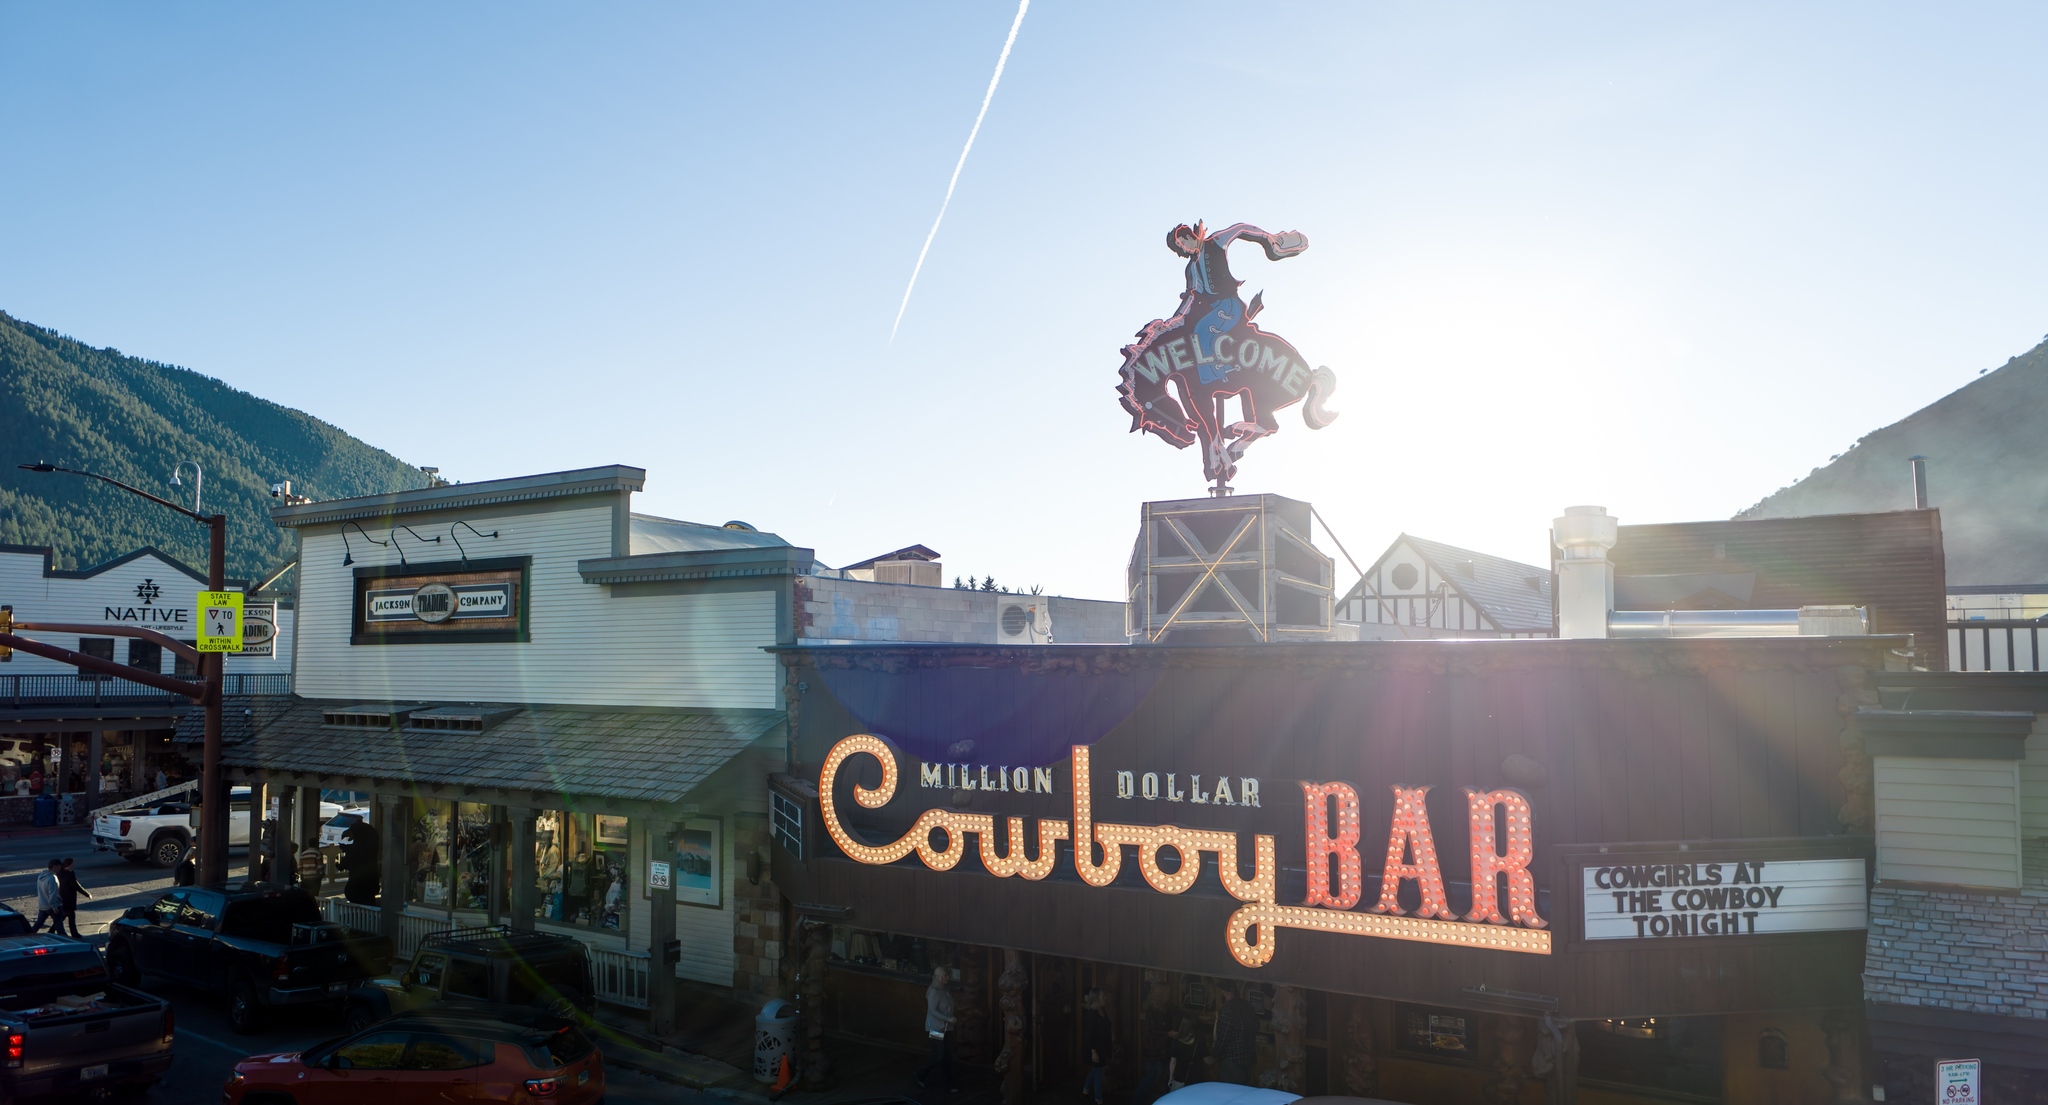 Million Dollar Cowboy Bar exterior in Jackson, Wyoming